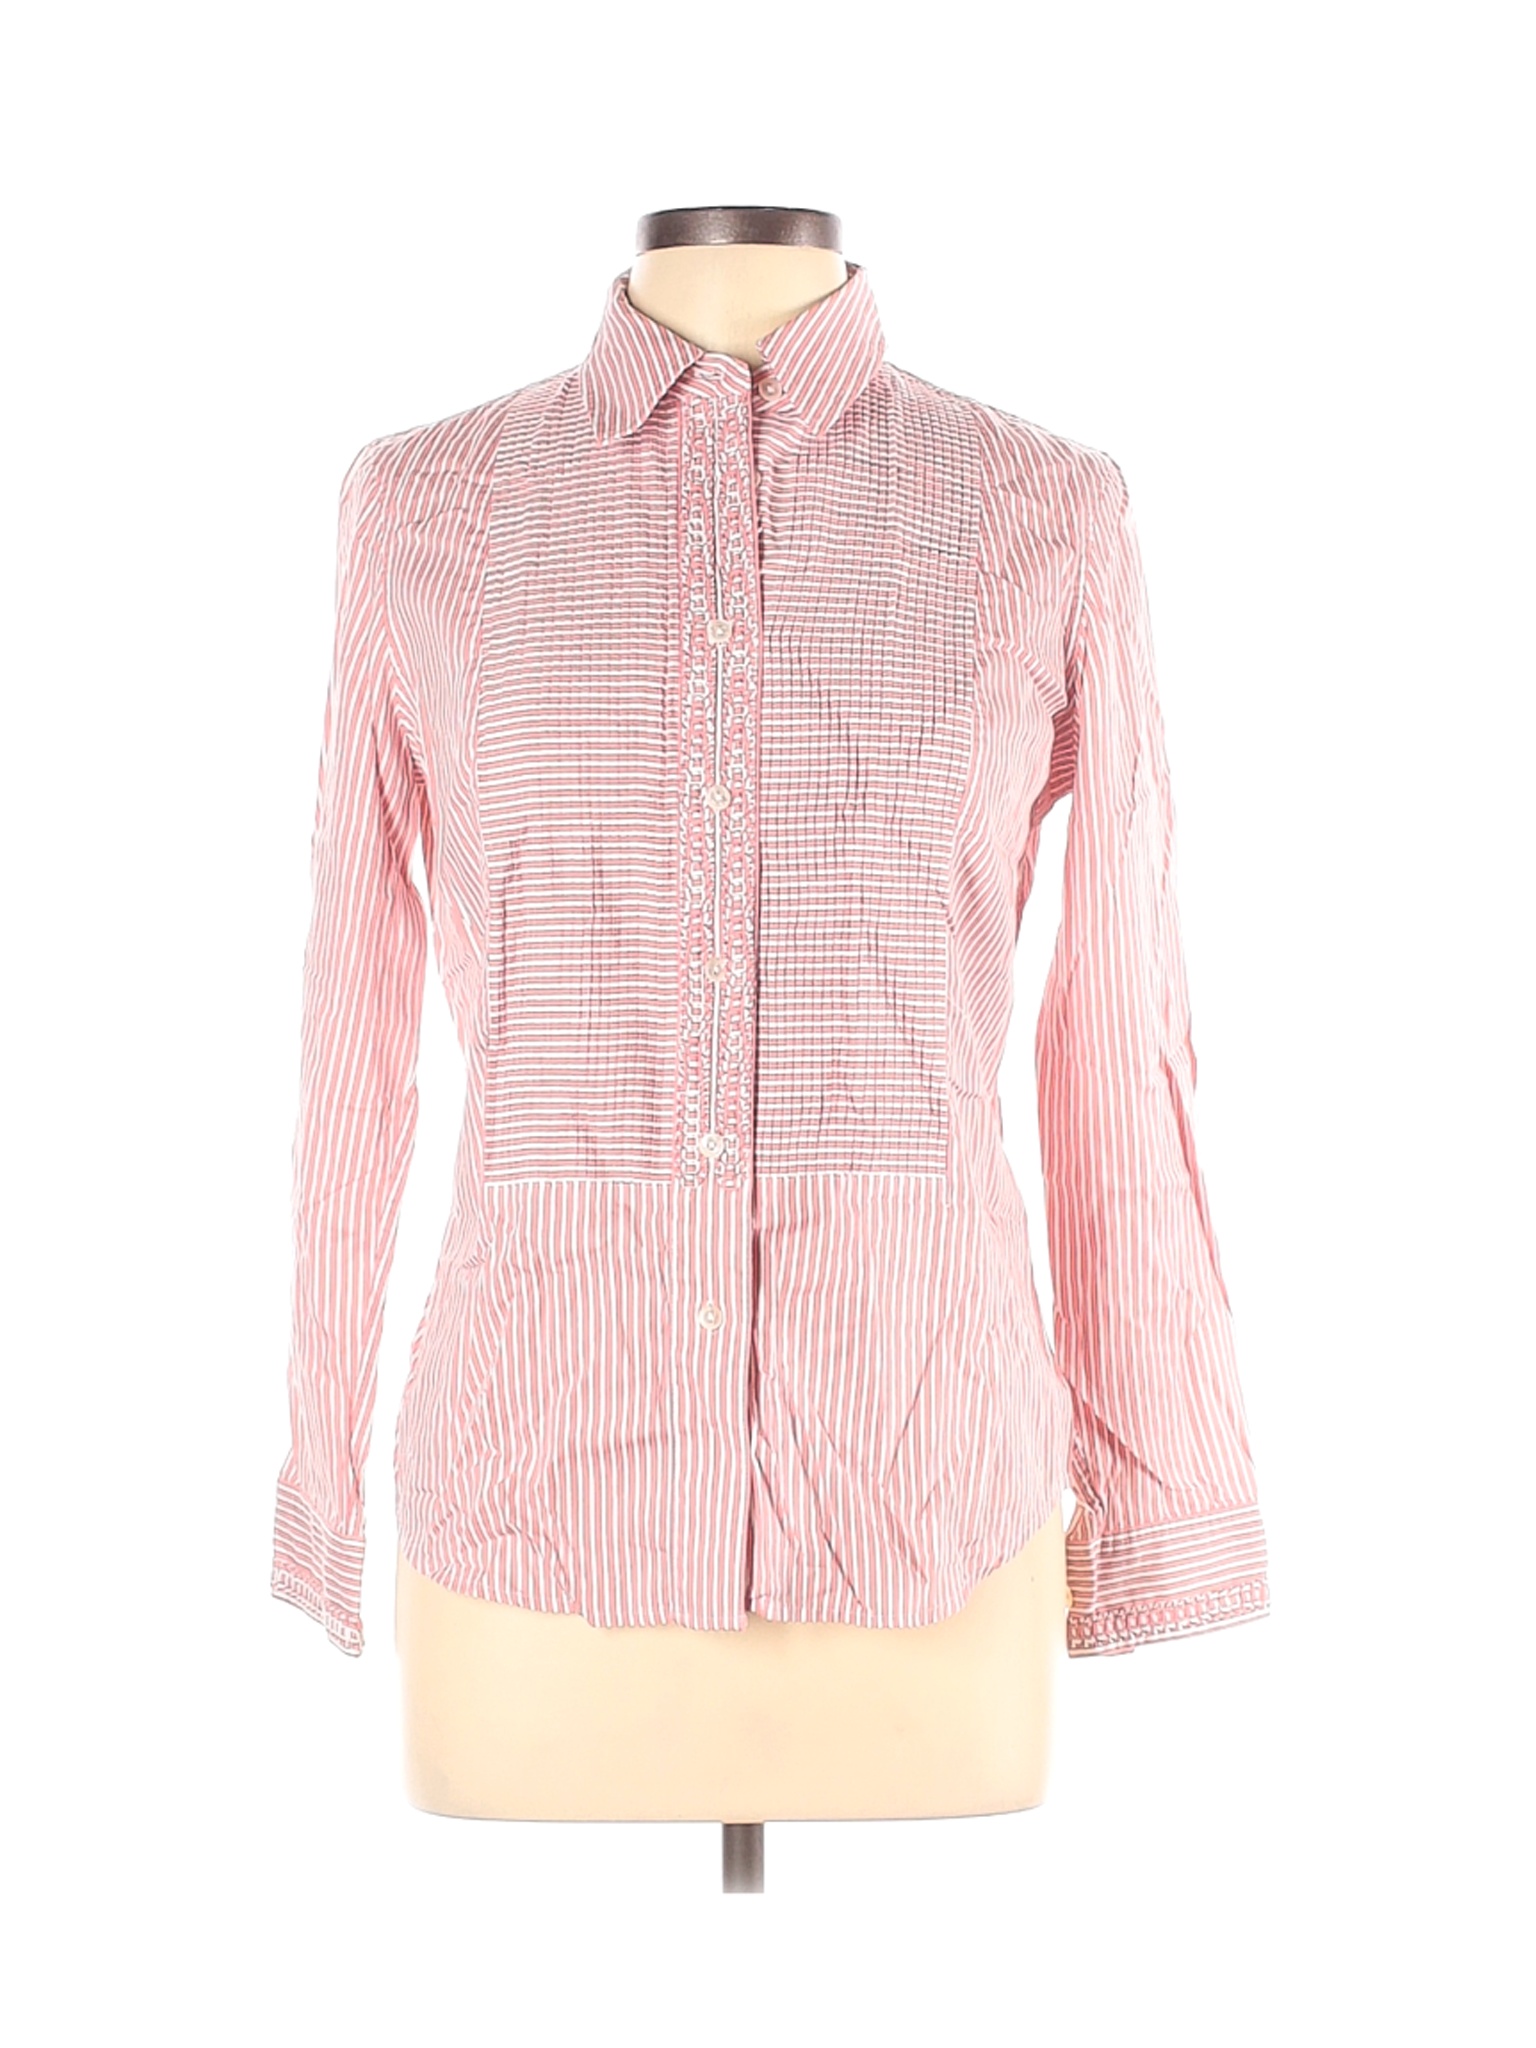 Jones New York Signature Women Pink Long Sleeve Blouse M | eBay